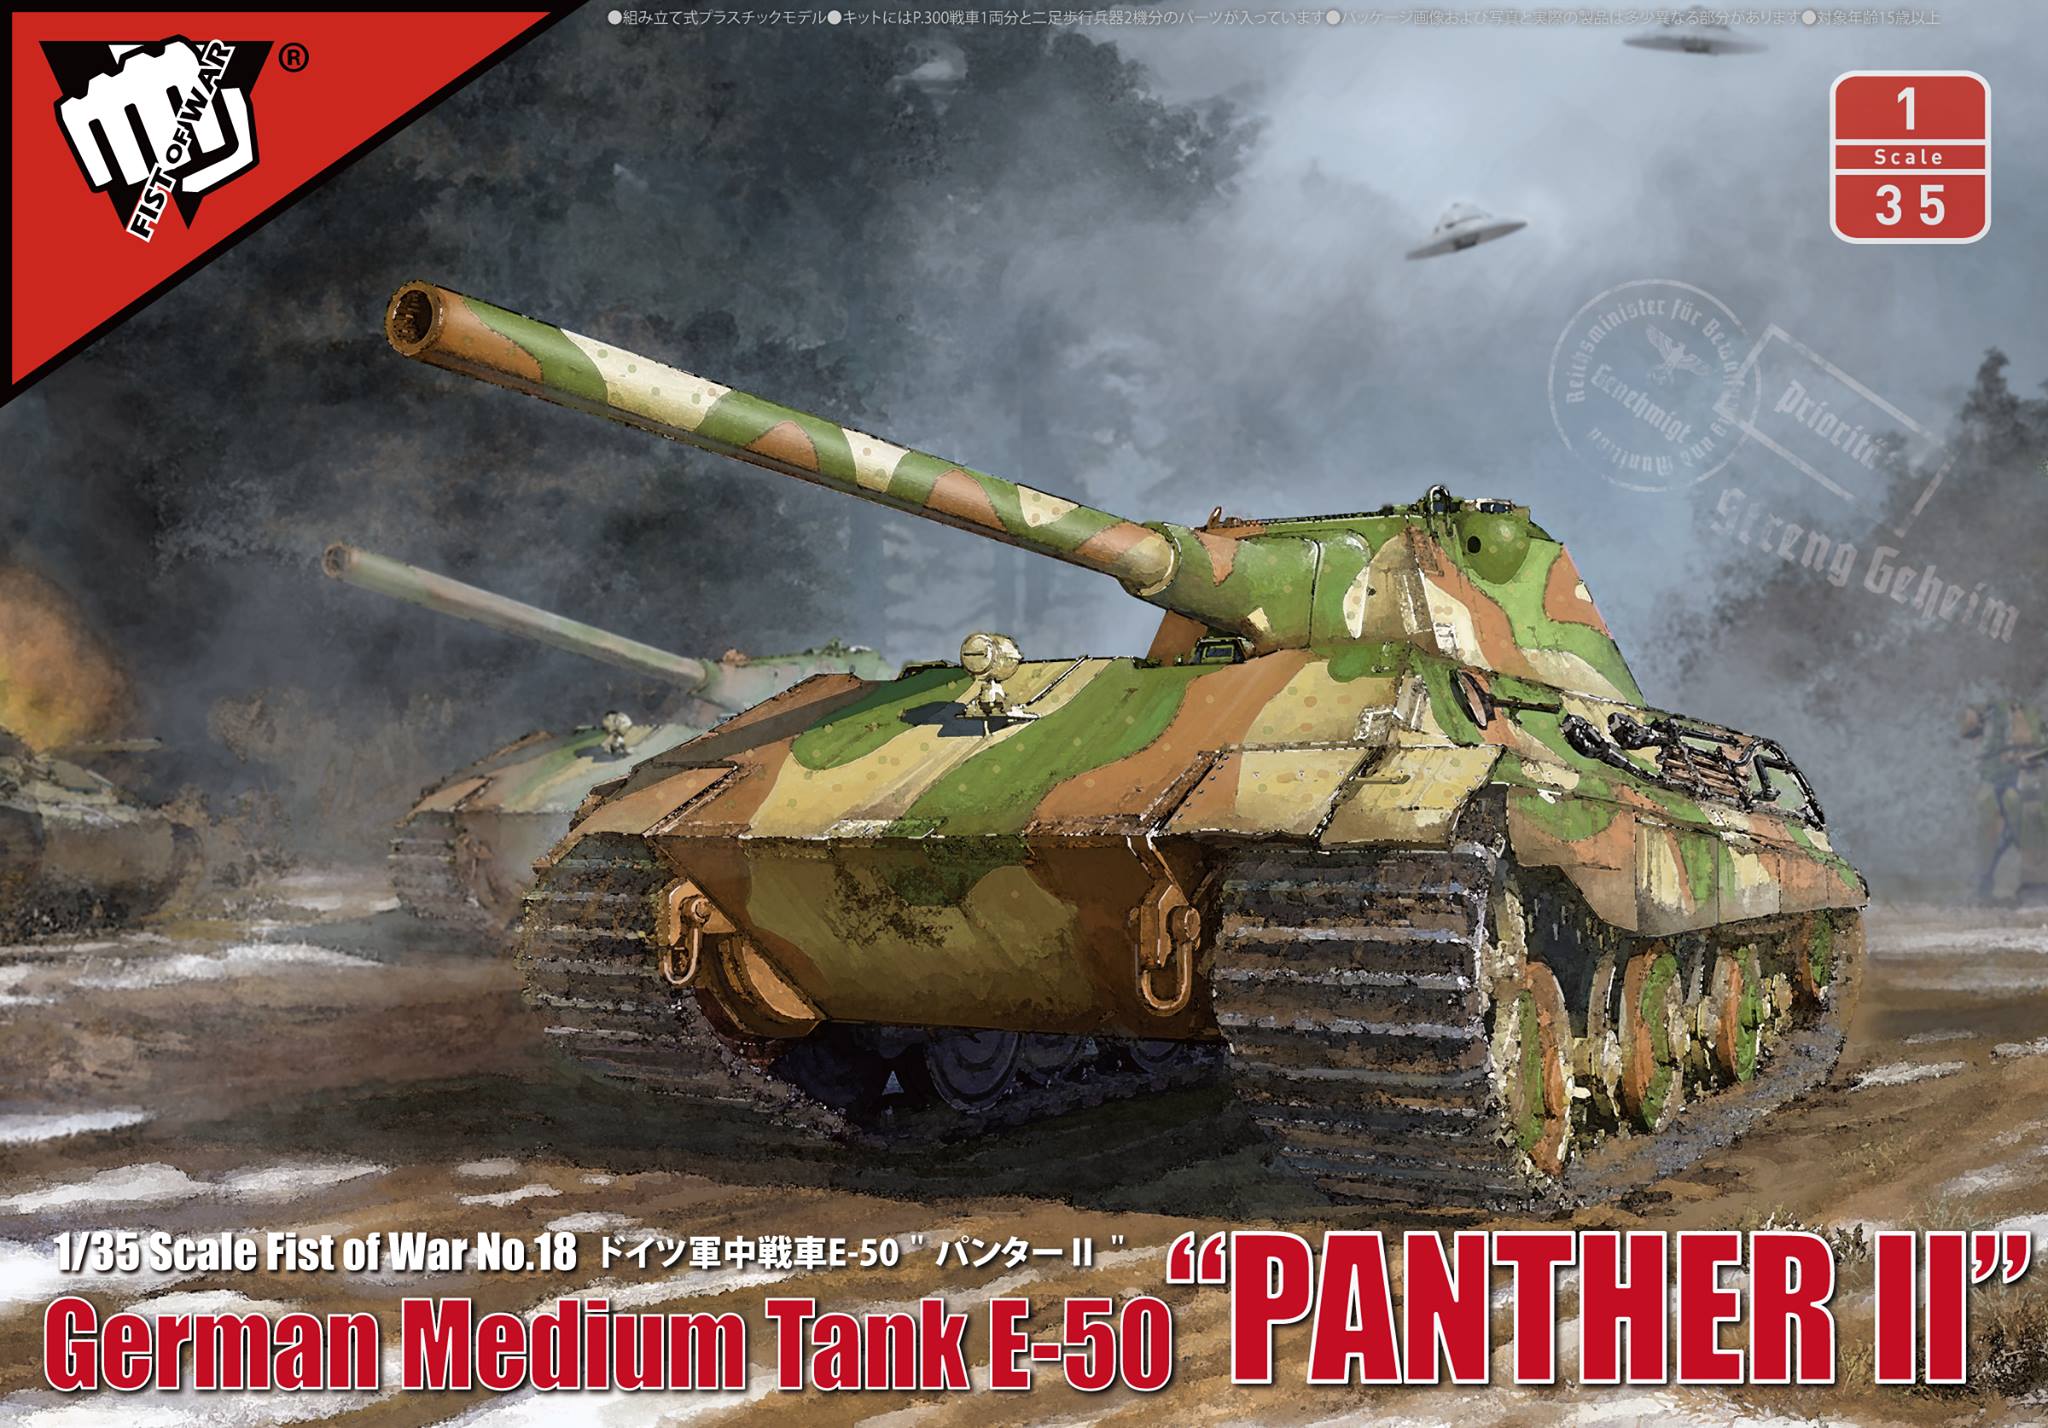 German Medium Tank E-50 "PANTHER II"